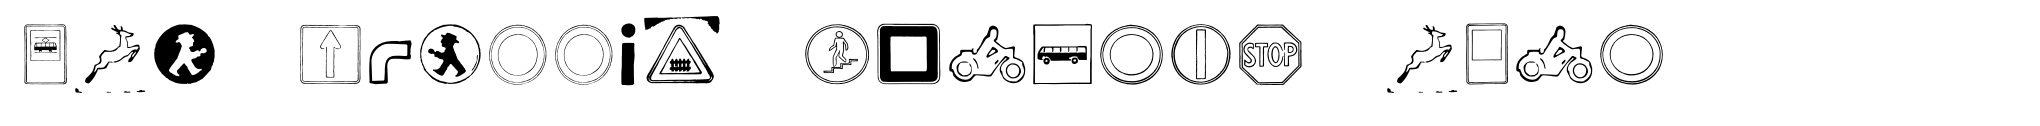 GDR Traffic Symbols Demo image